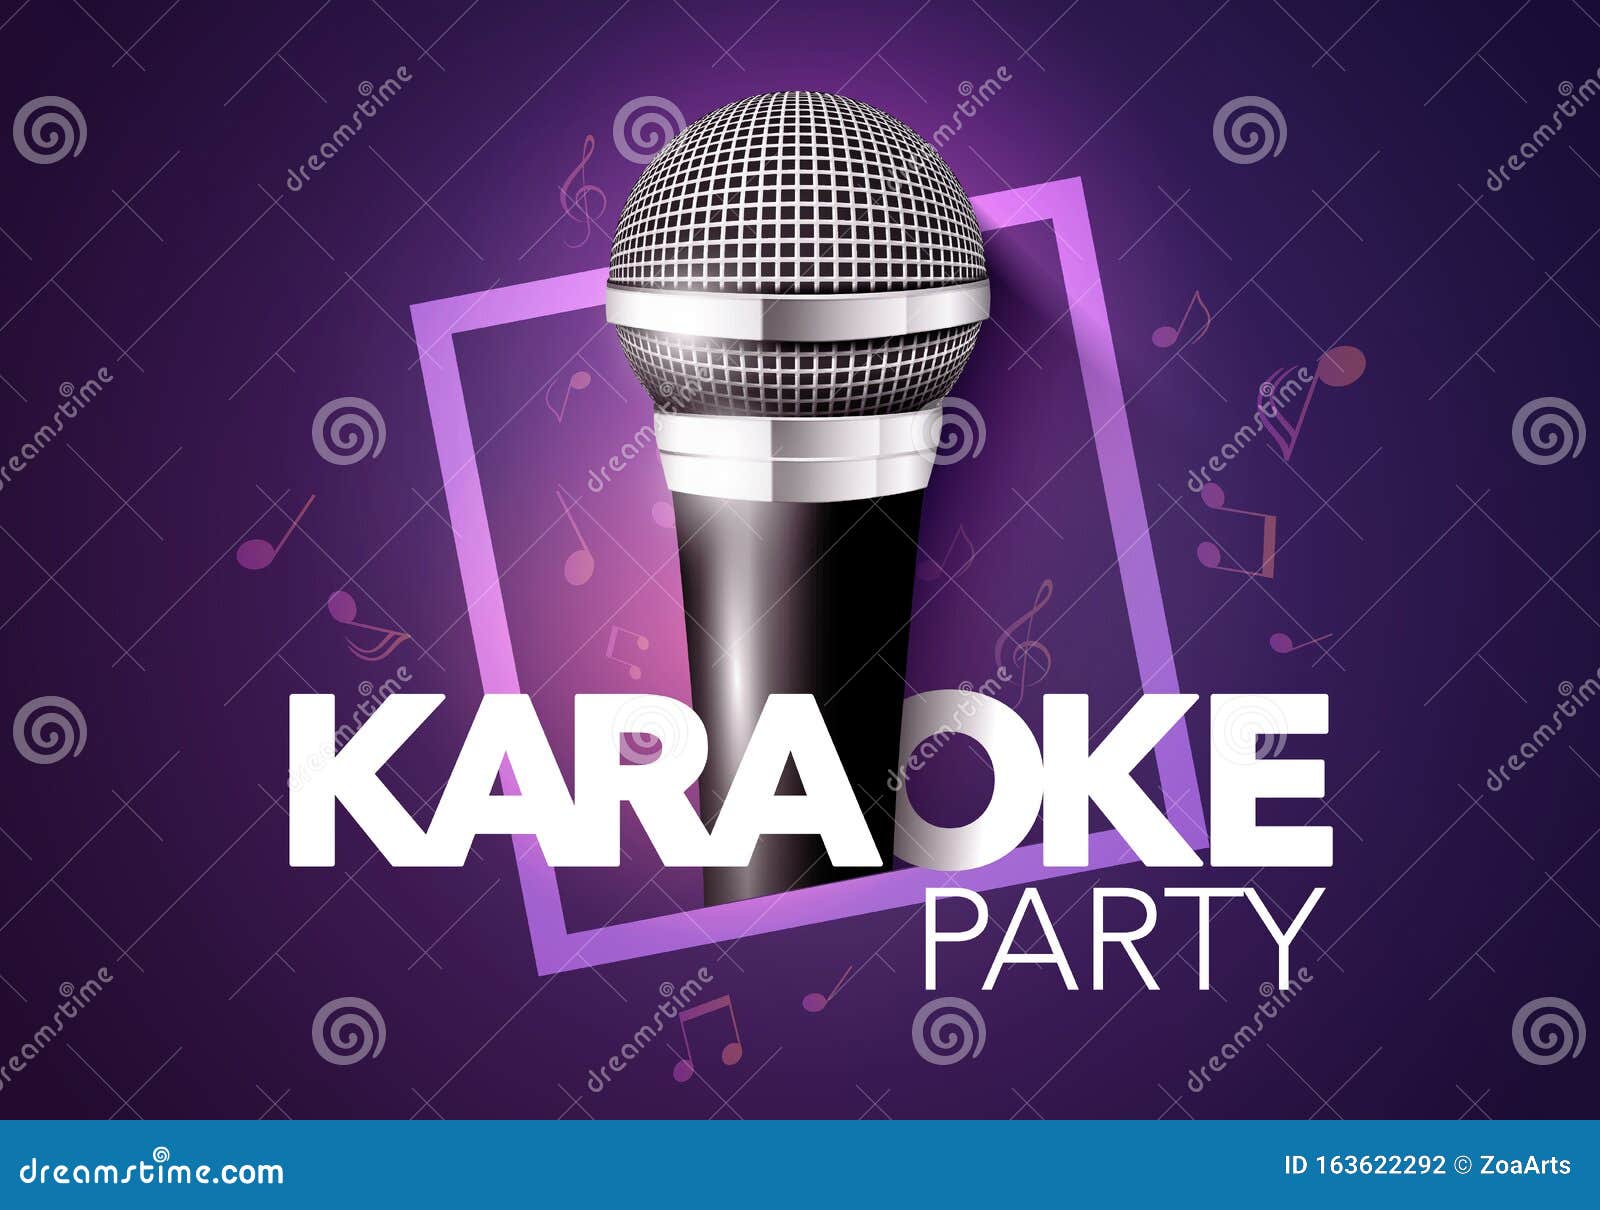   karaoke party banner